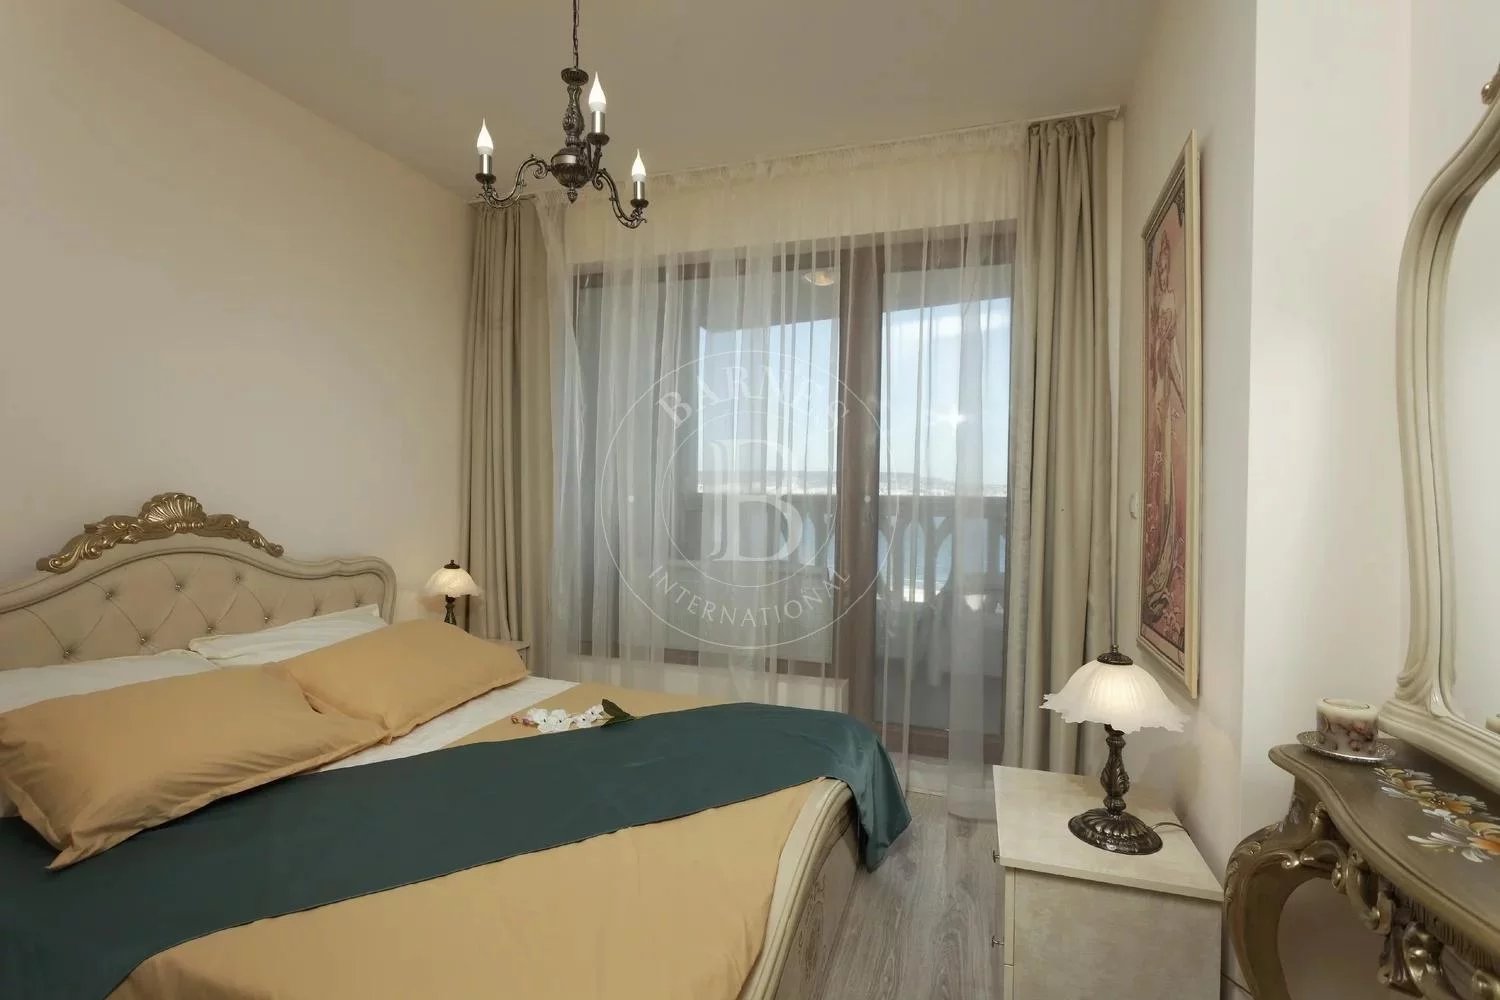 Varna  - Appartement 2 Pièces, 1 Chambre - picture 7